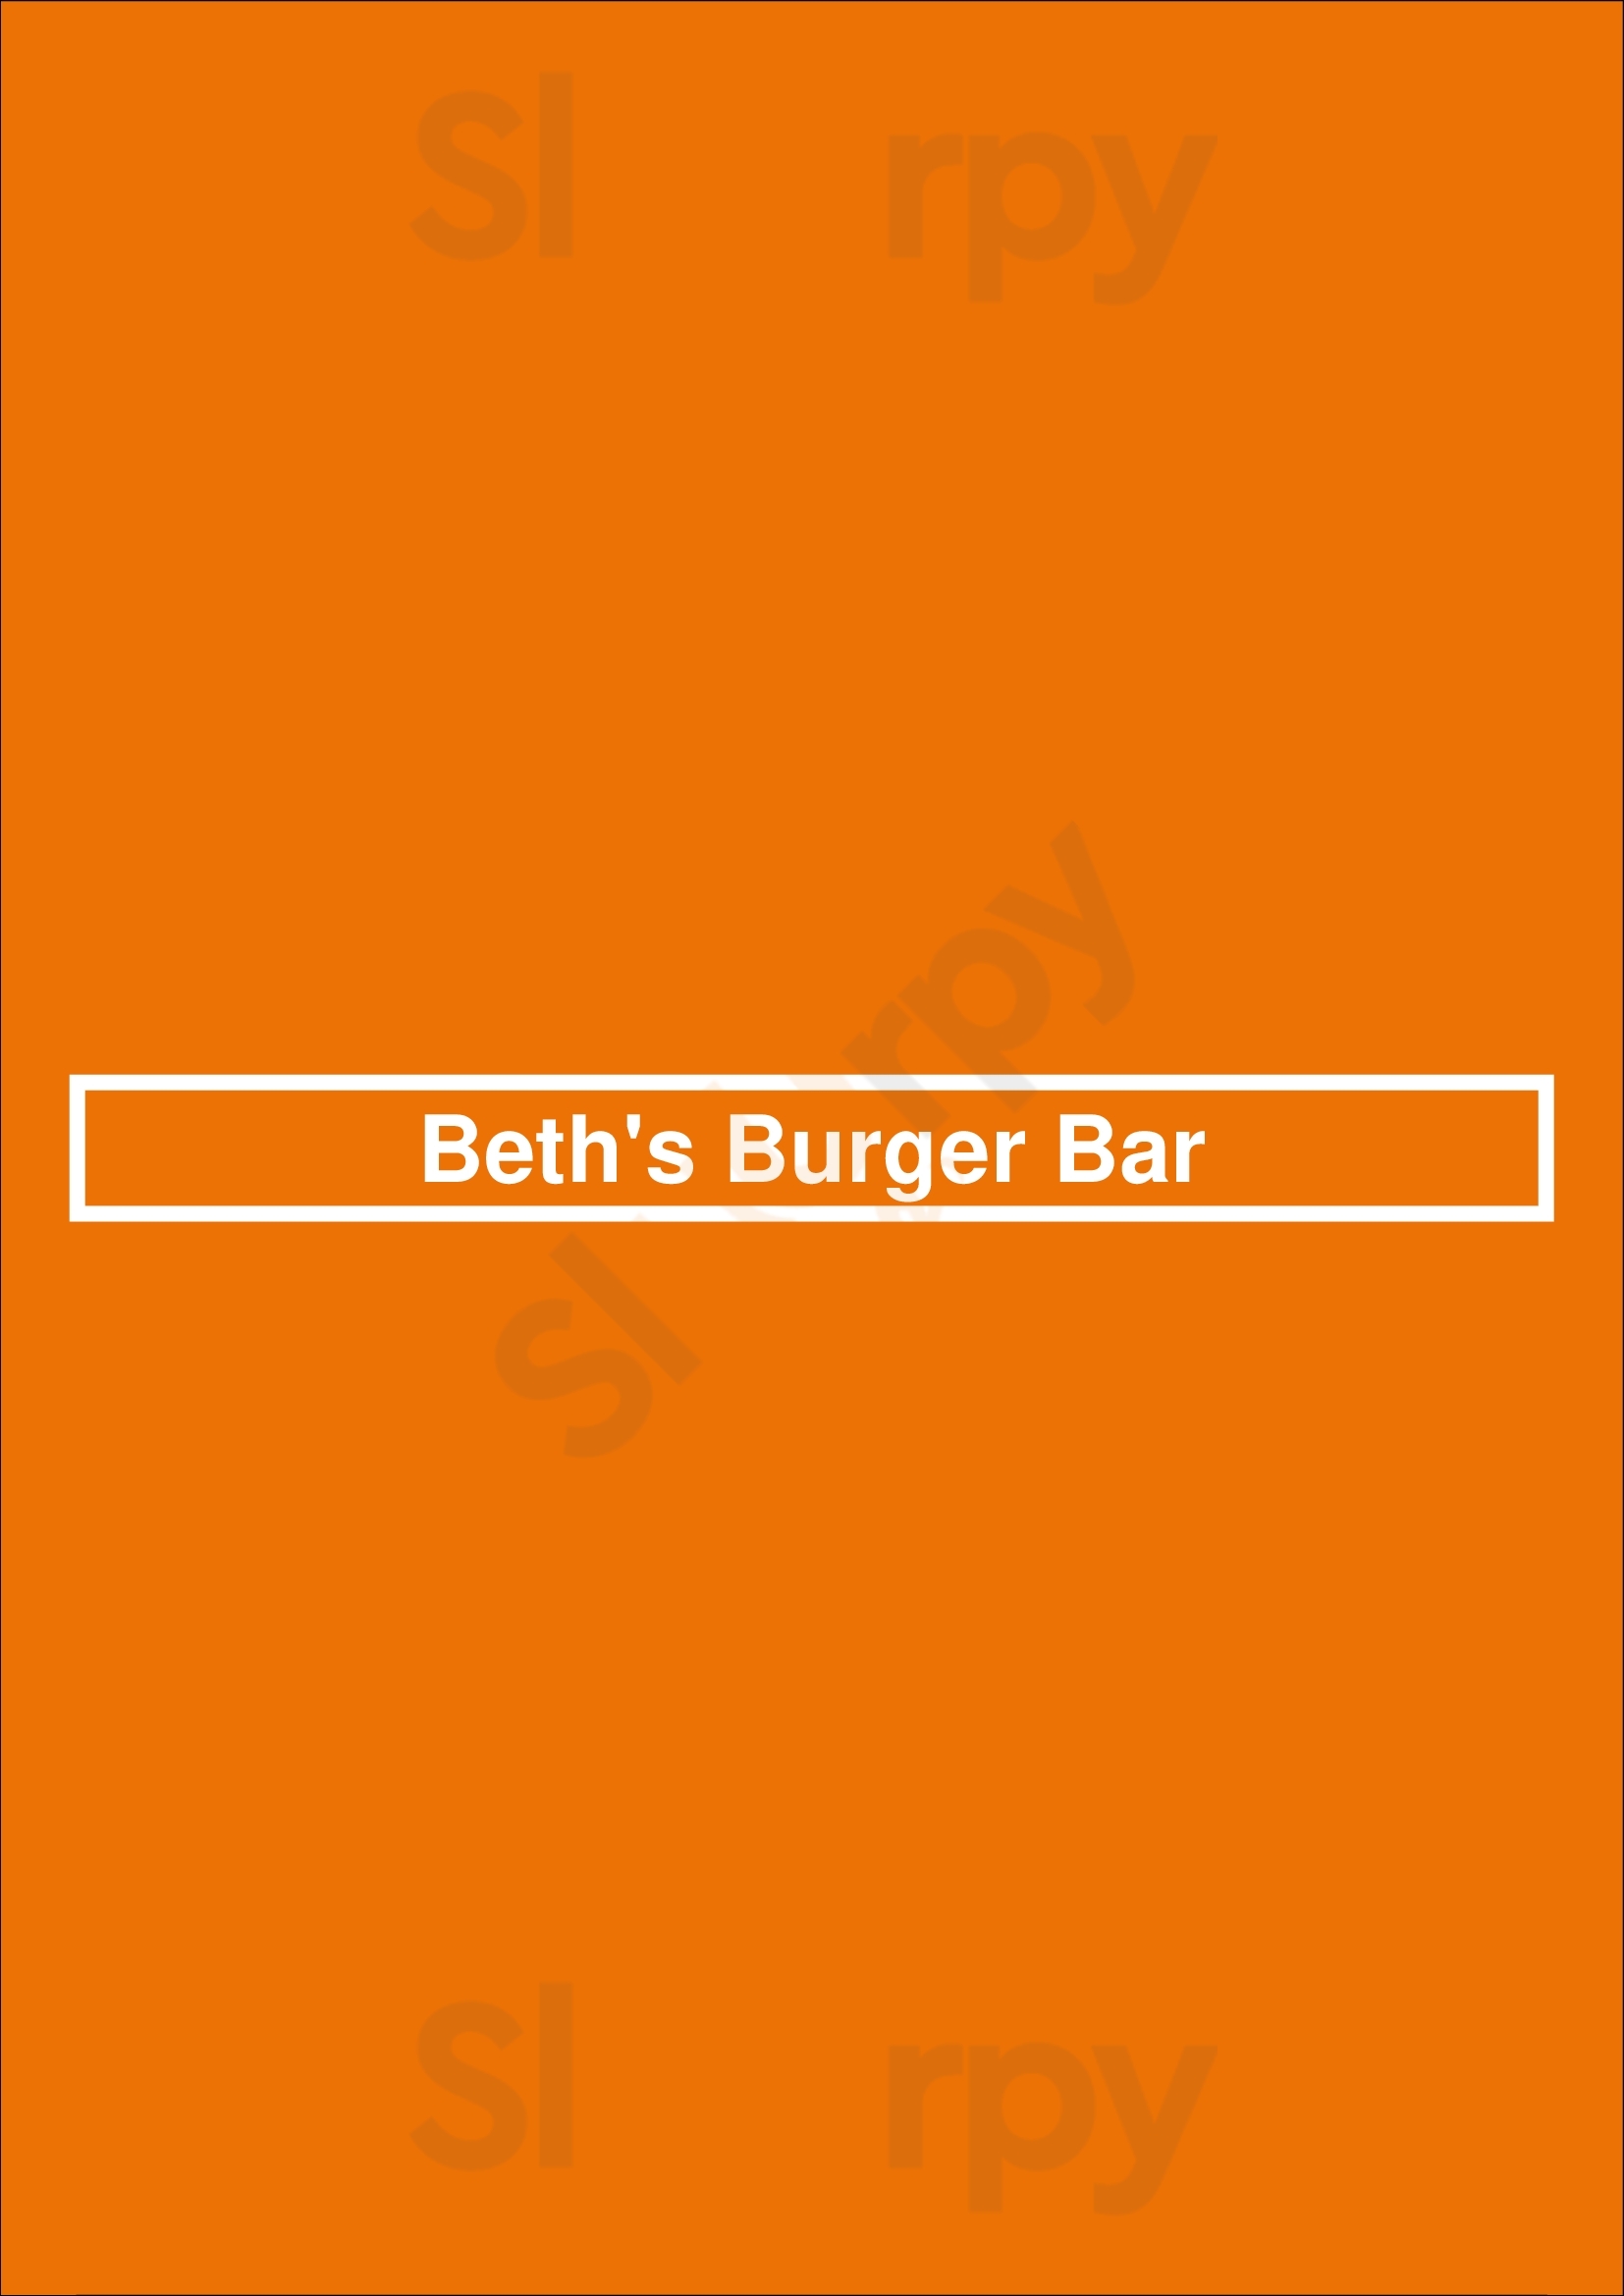 Beth's Burger Bar Orlando Menu - 1